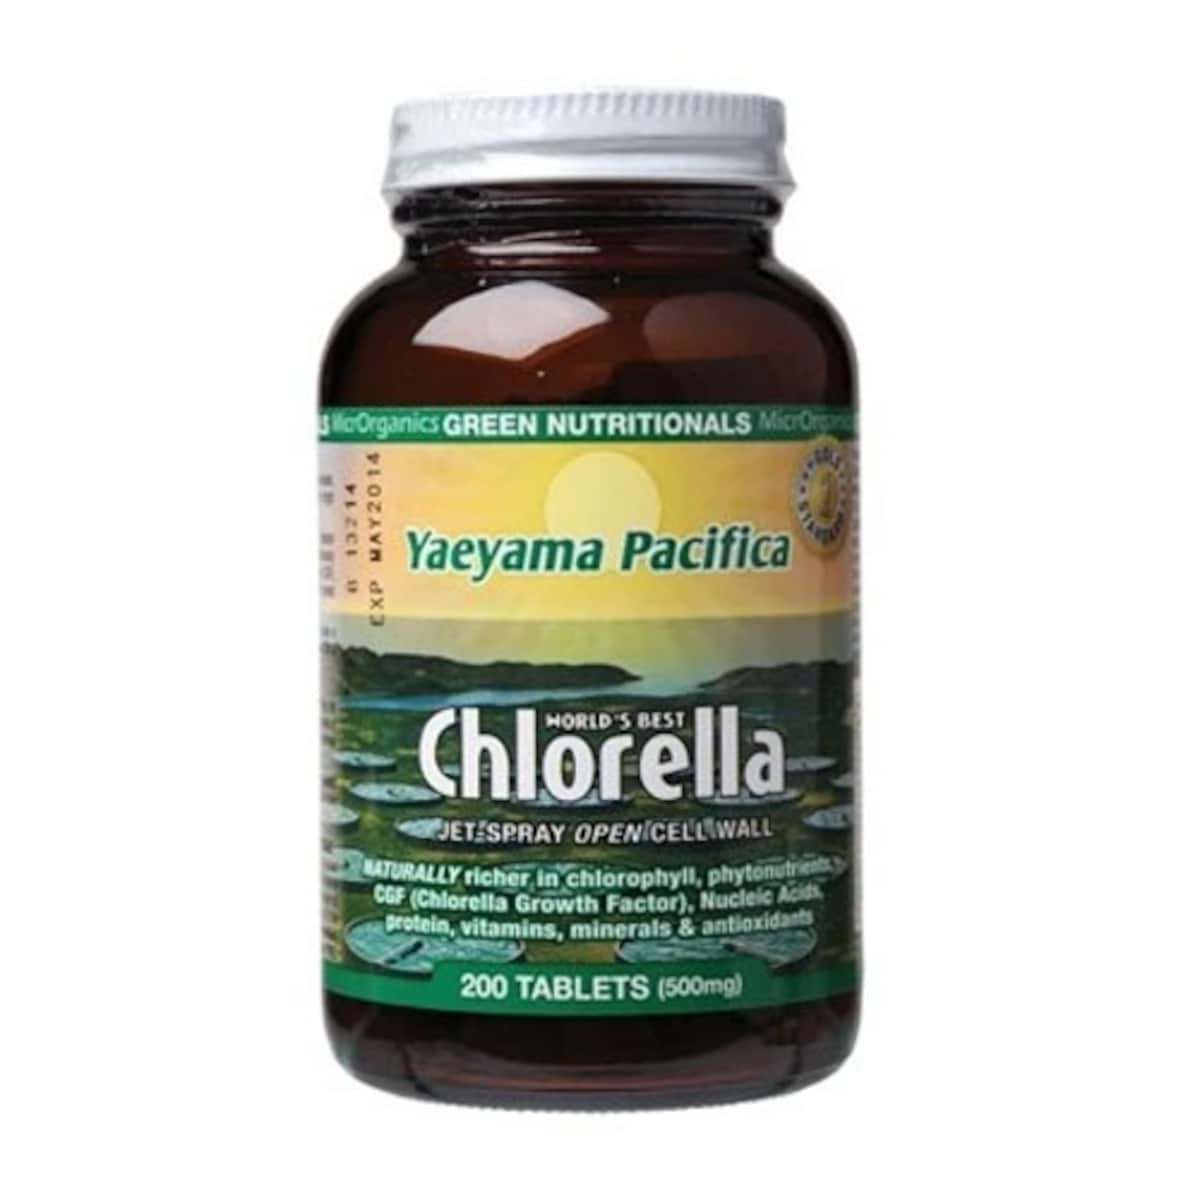 Green Nutritionals Yaeyama Pacifica Chlorella 200 Tablets Australia